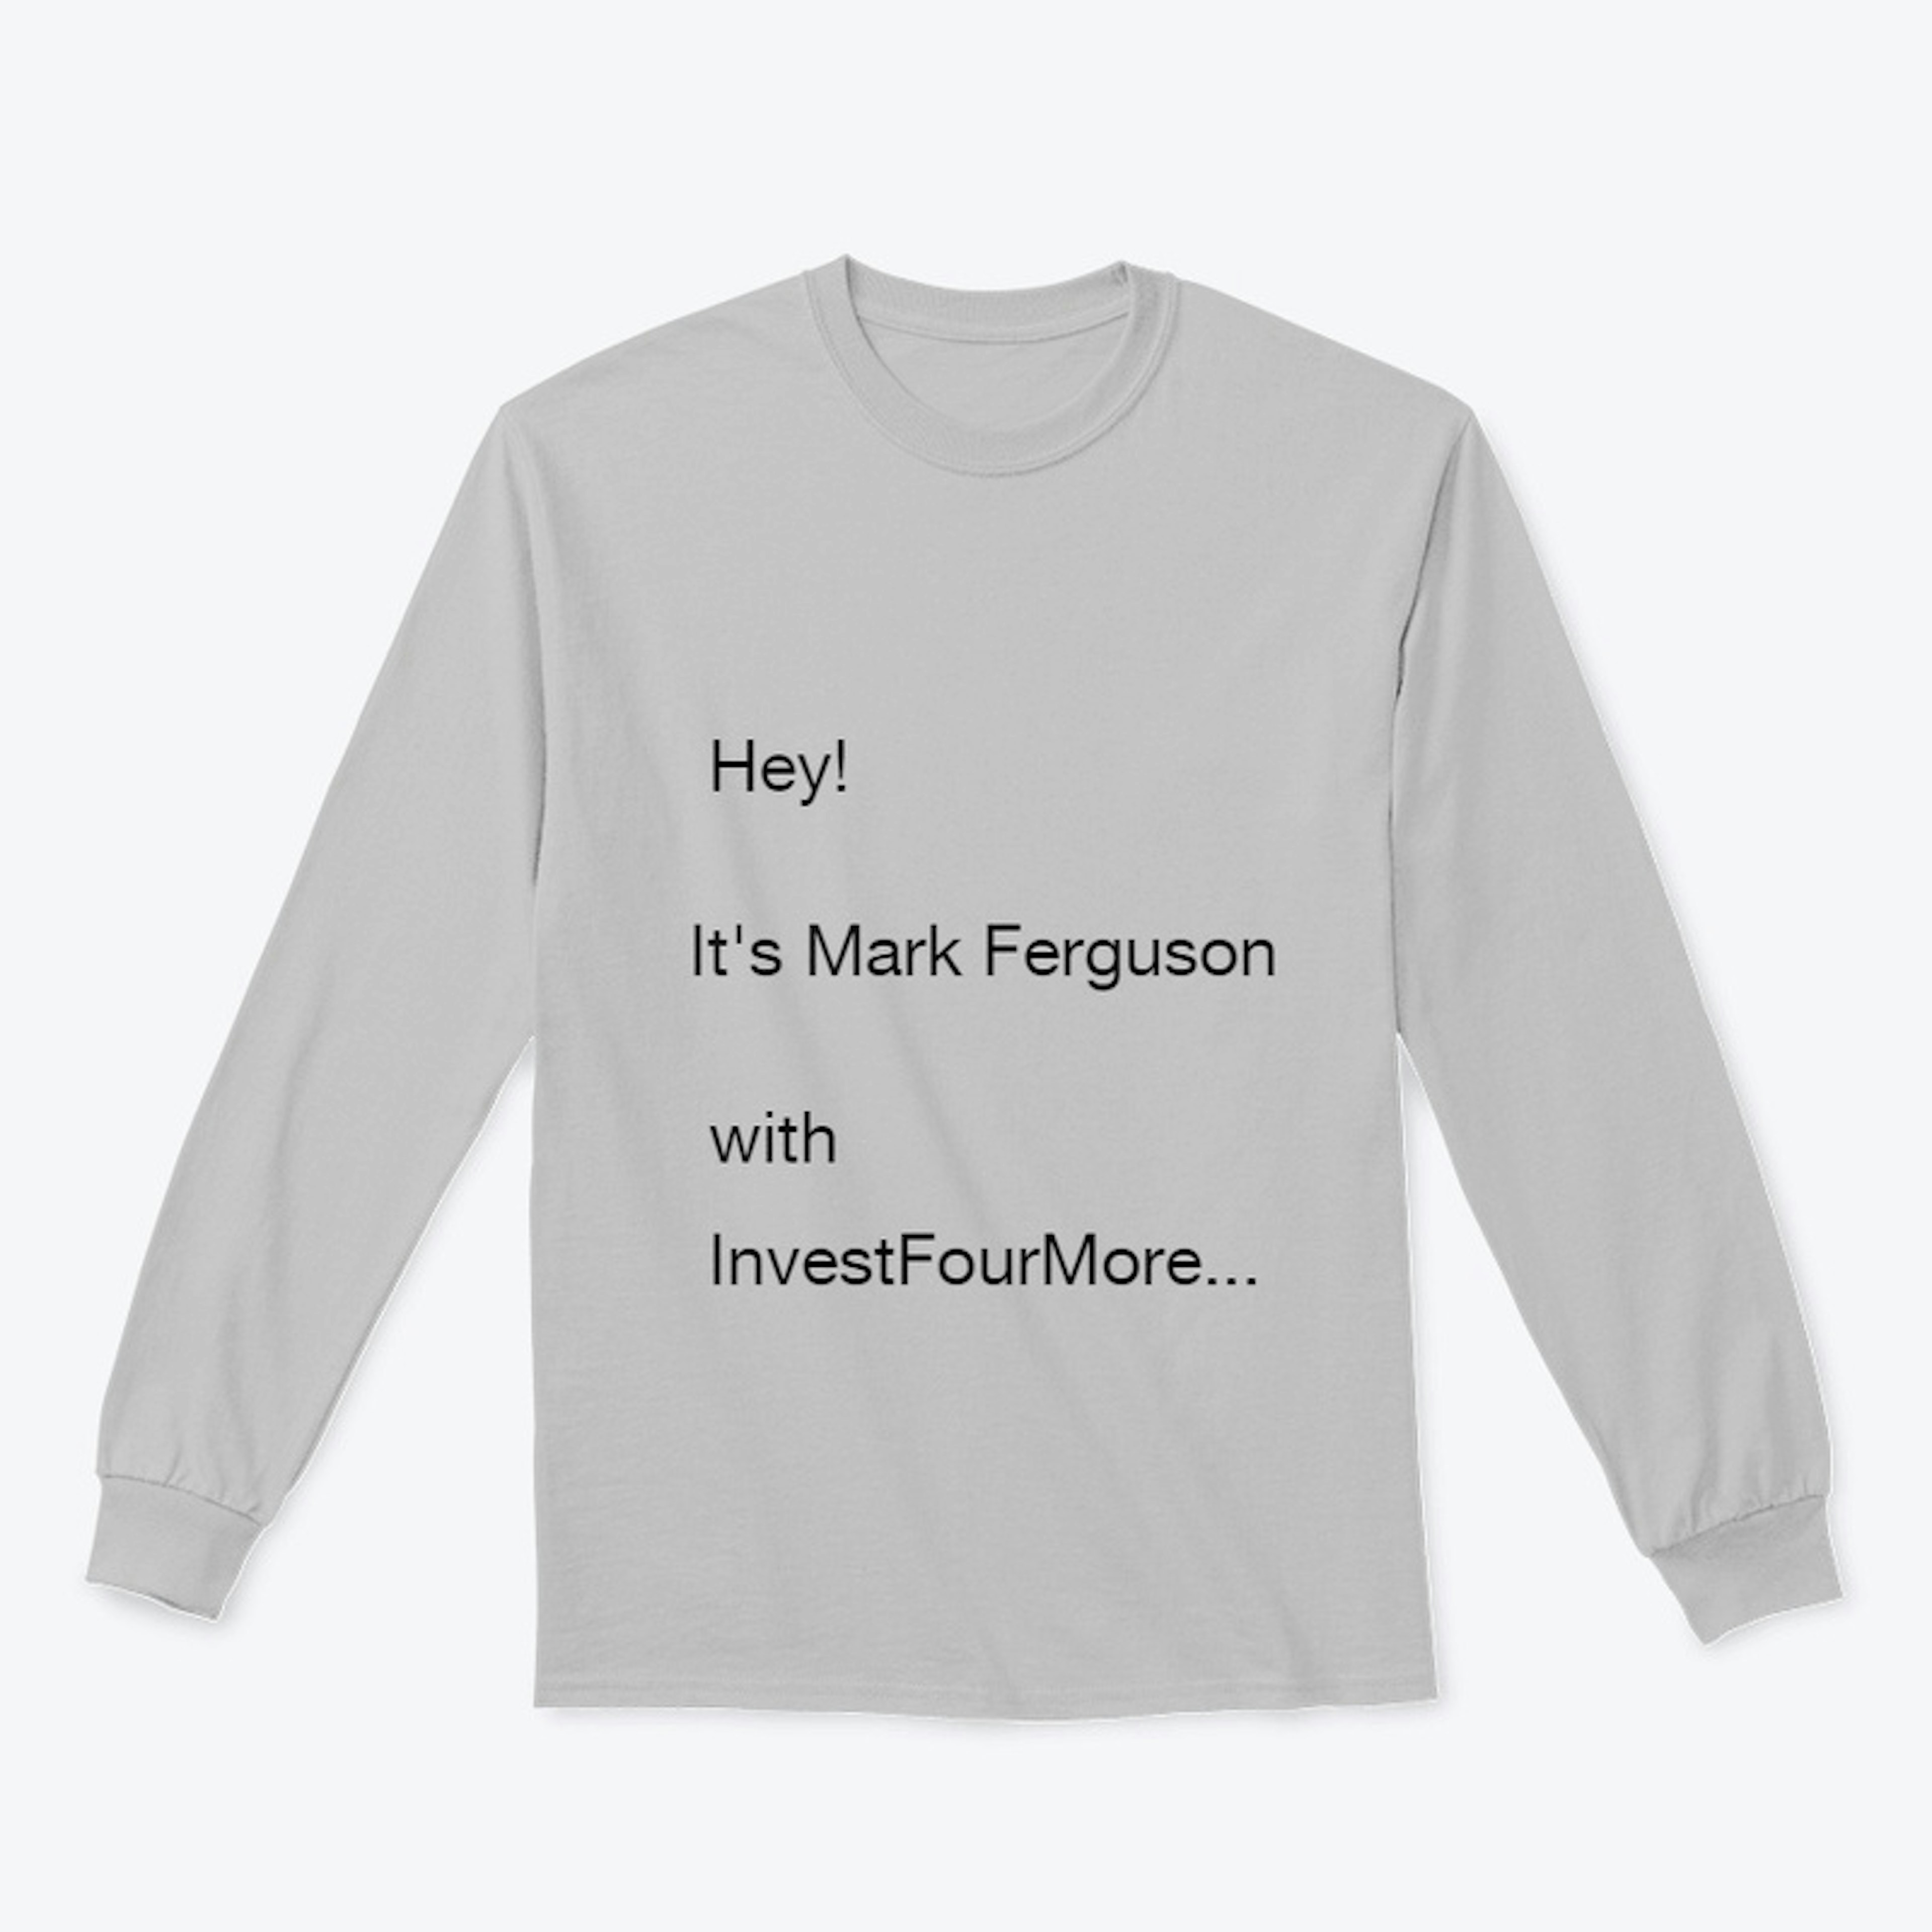 Mark Ferguson with InvestFourMore